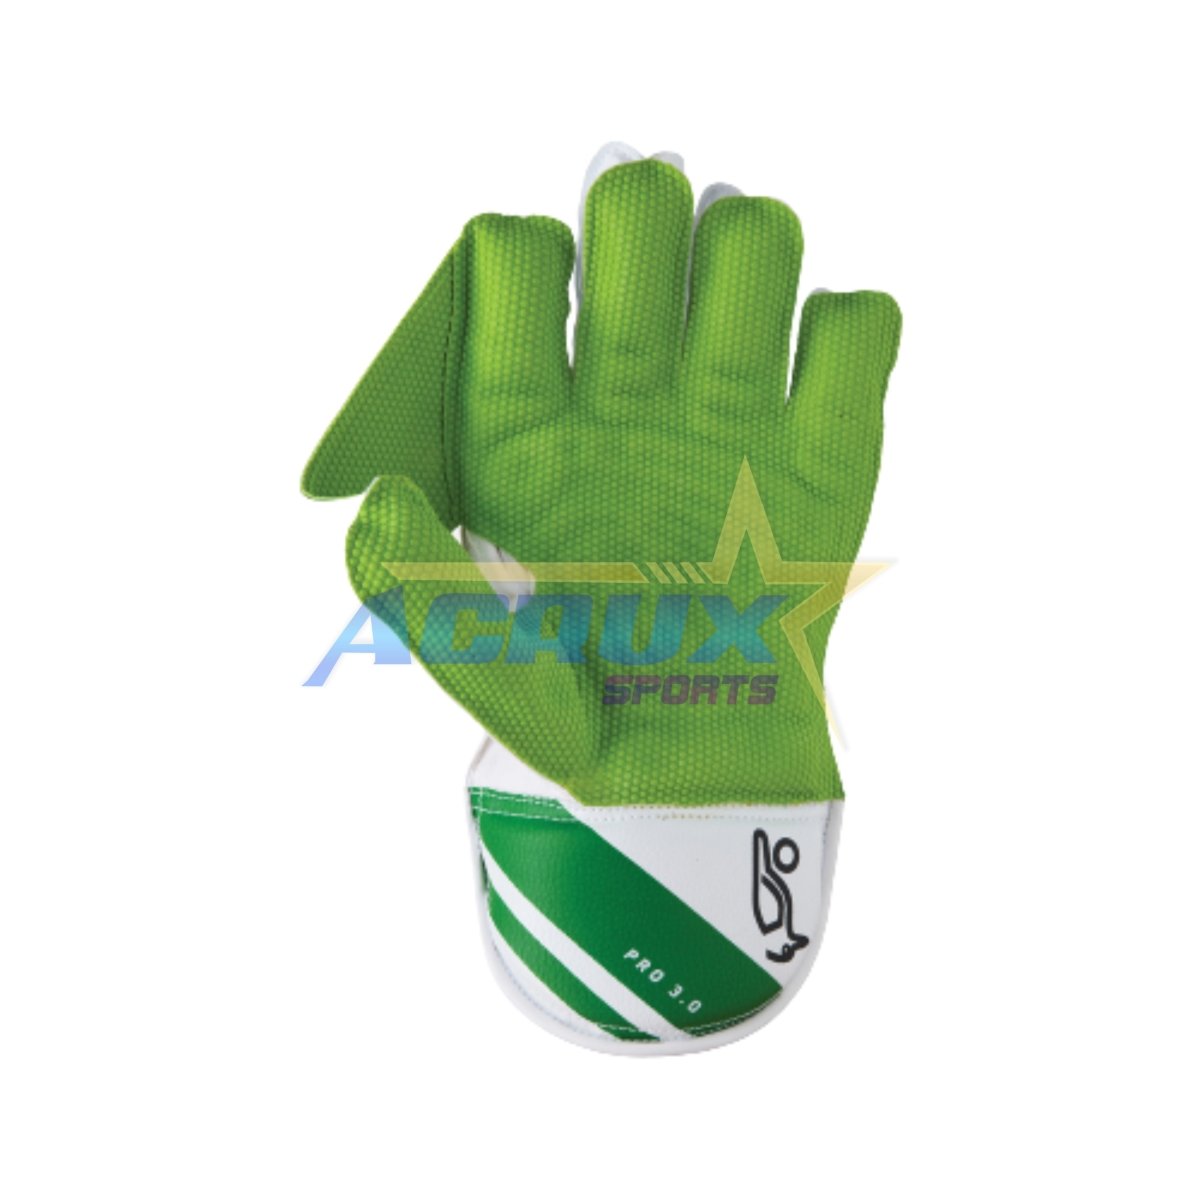 Kookaburra Kahuna Pro 3.0 Cricket Wicket Keeping Gloves.